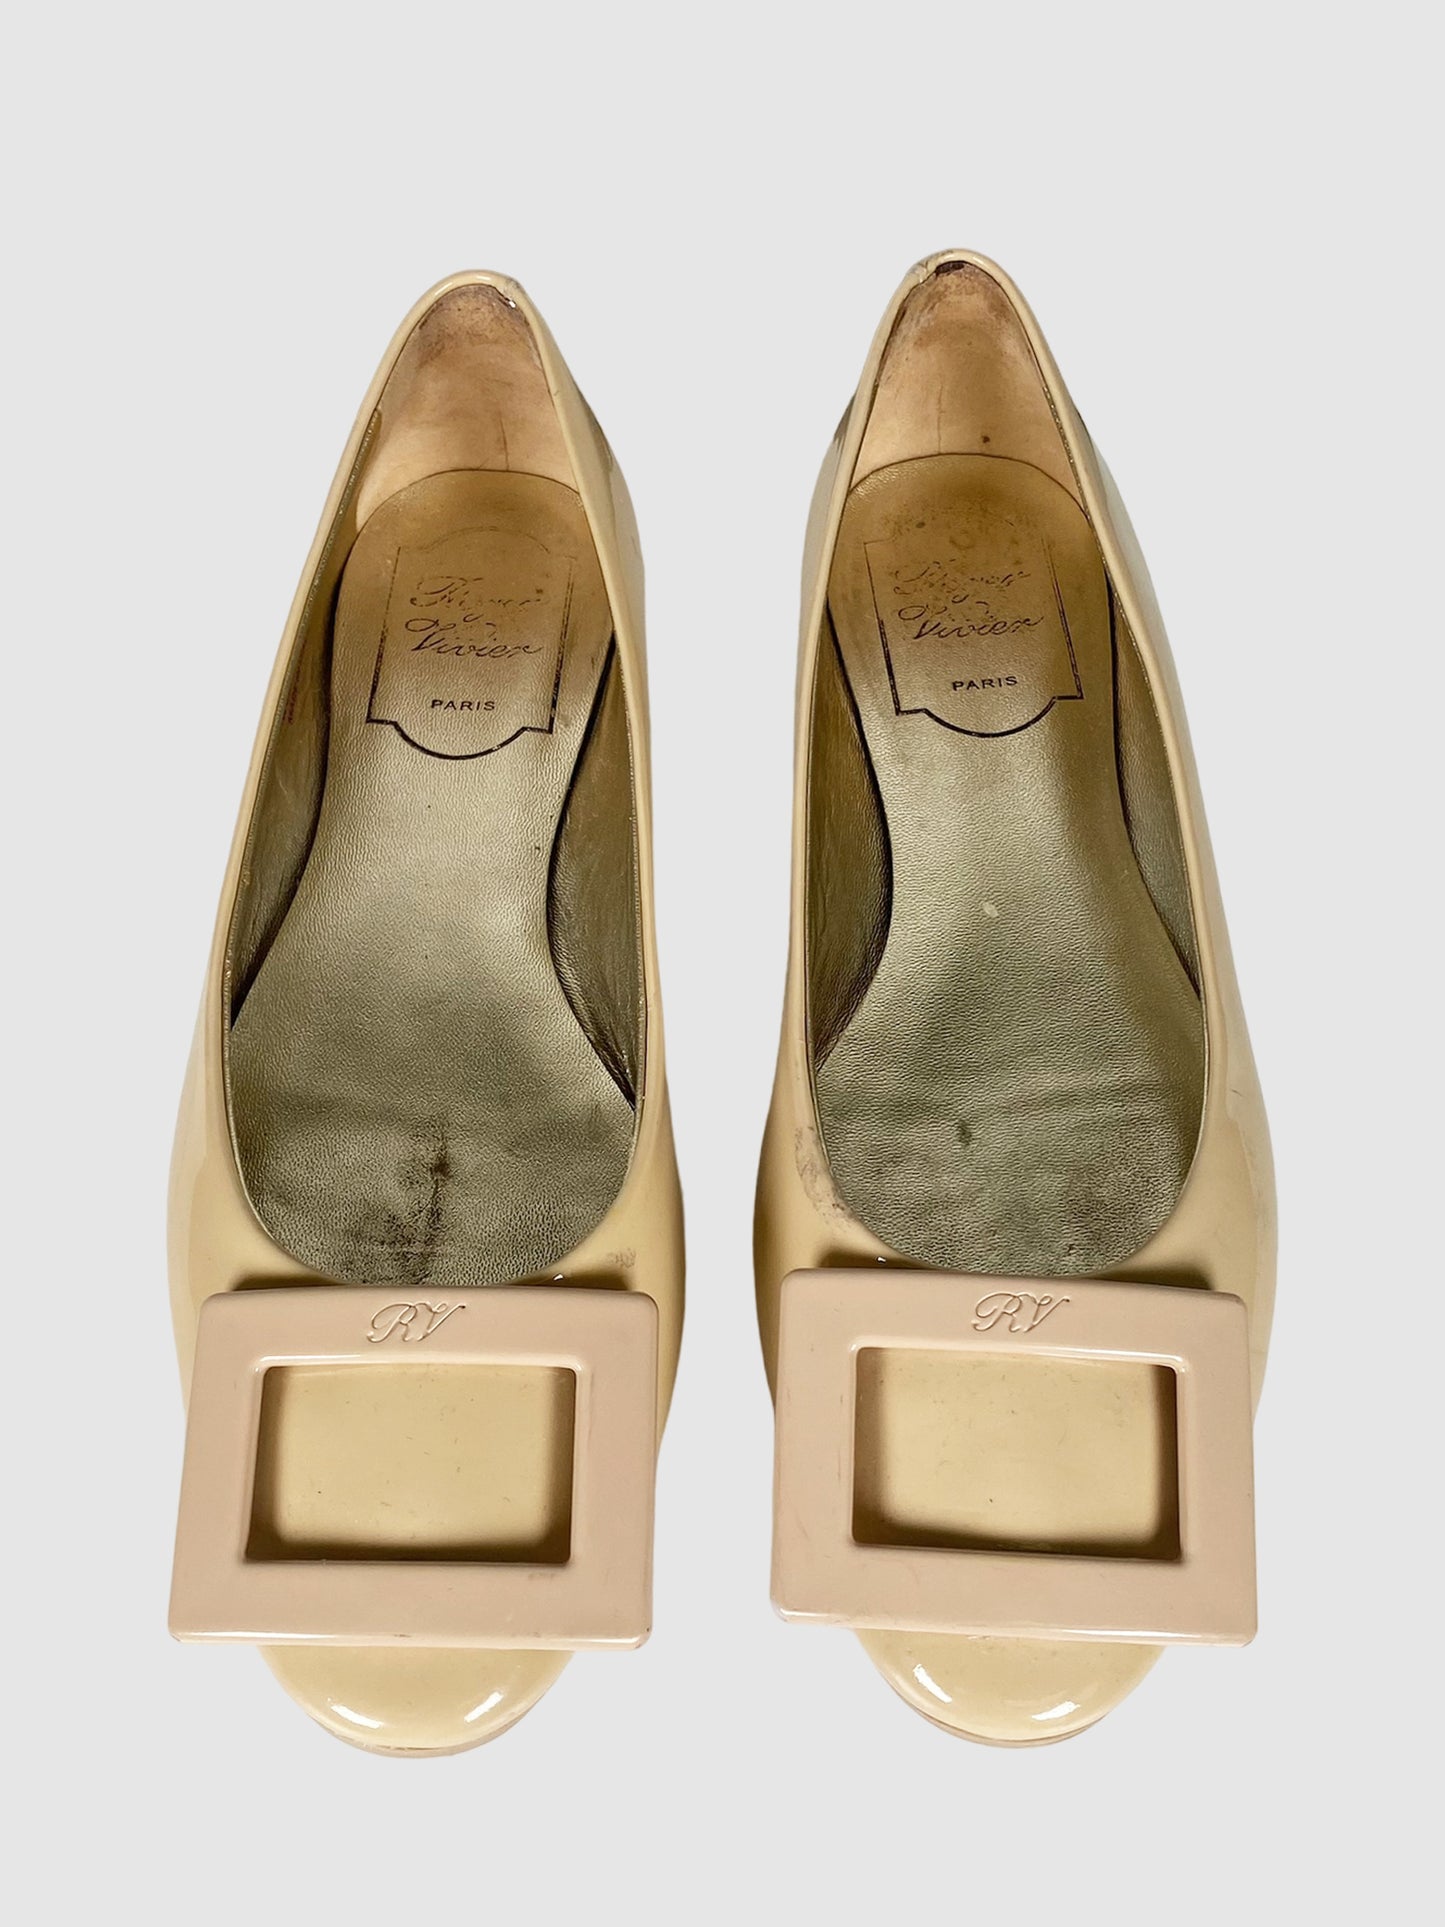 Patent Leather Ballerina Flats - Size 36